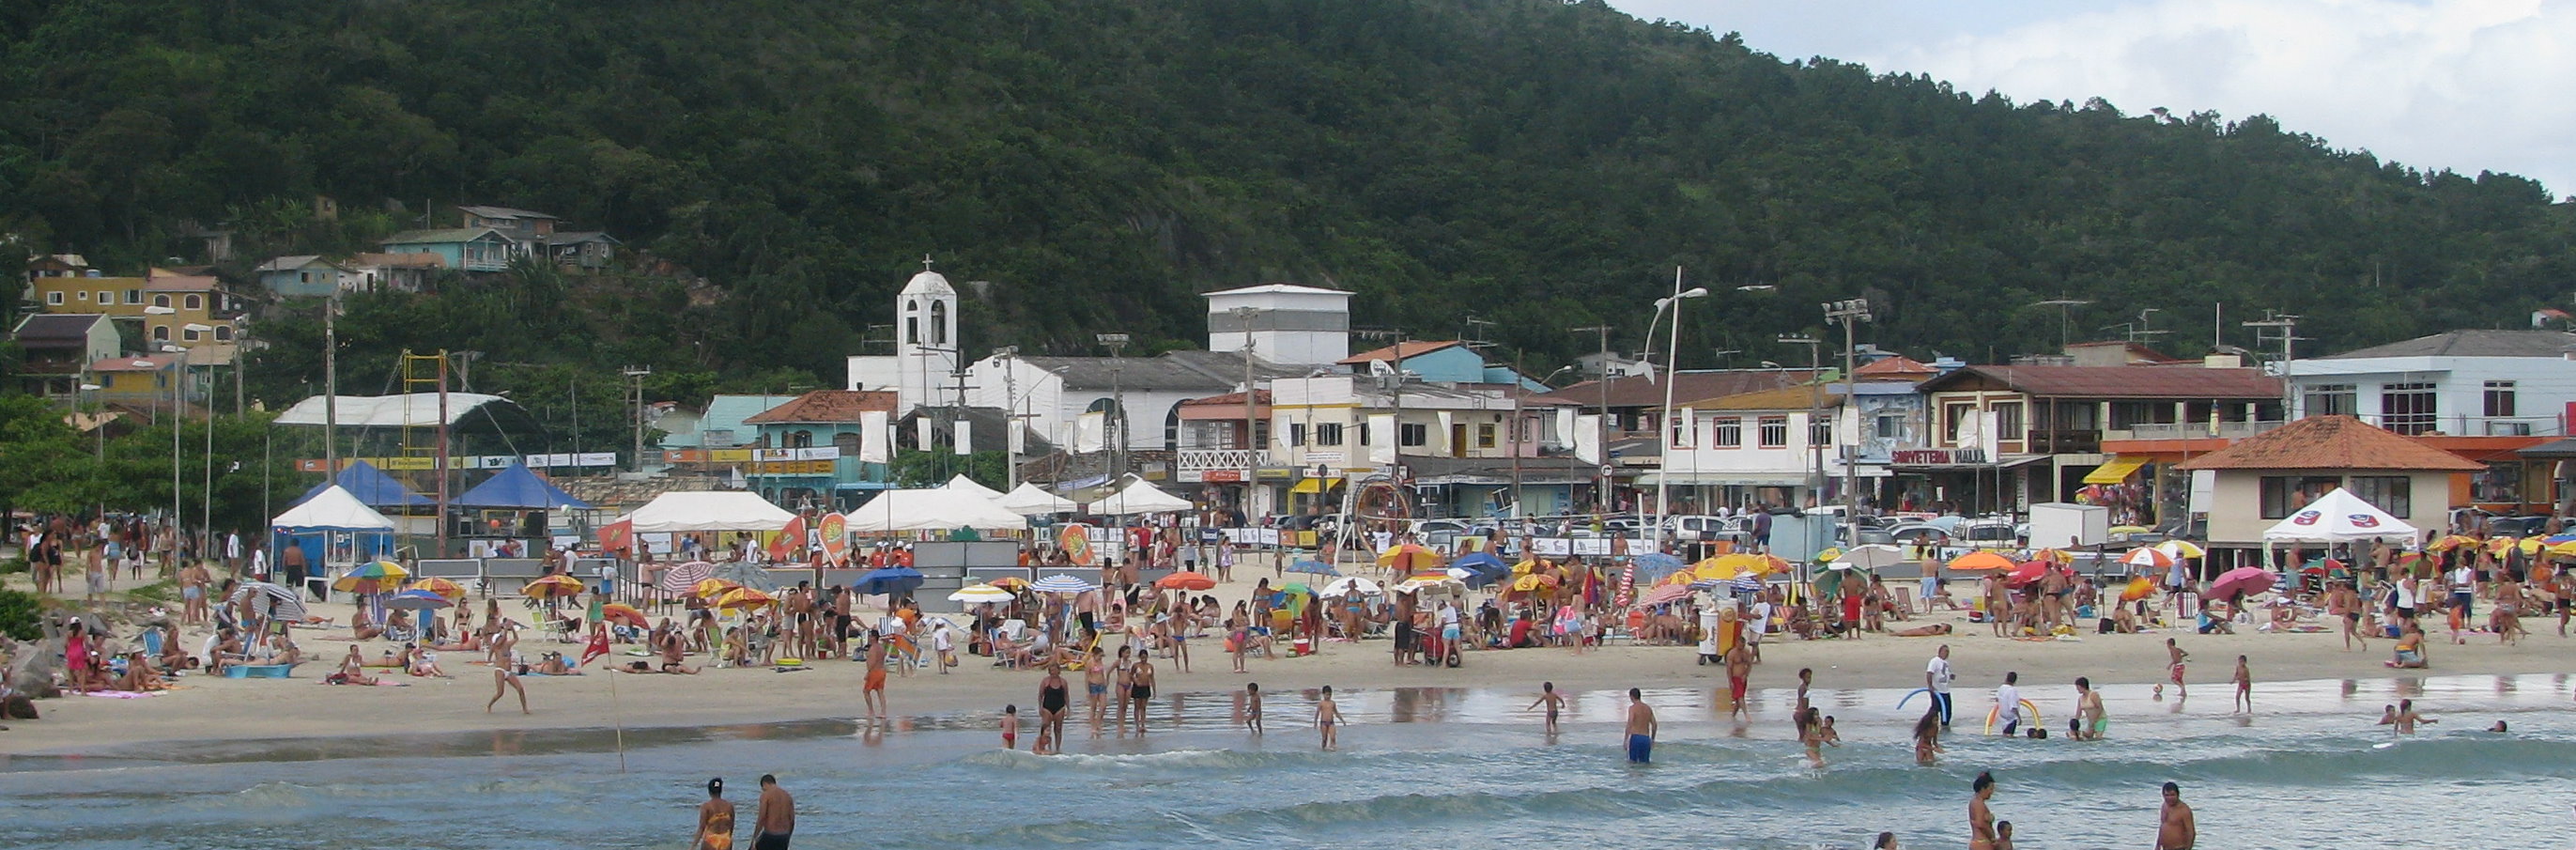 Florianopolis-Brazil-beach